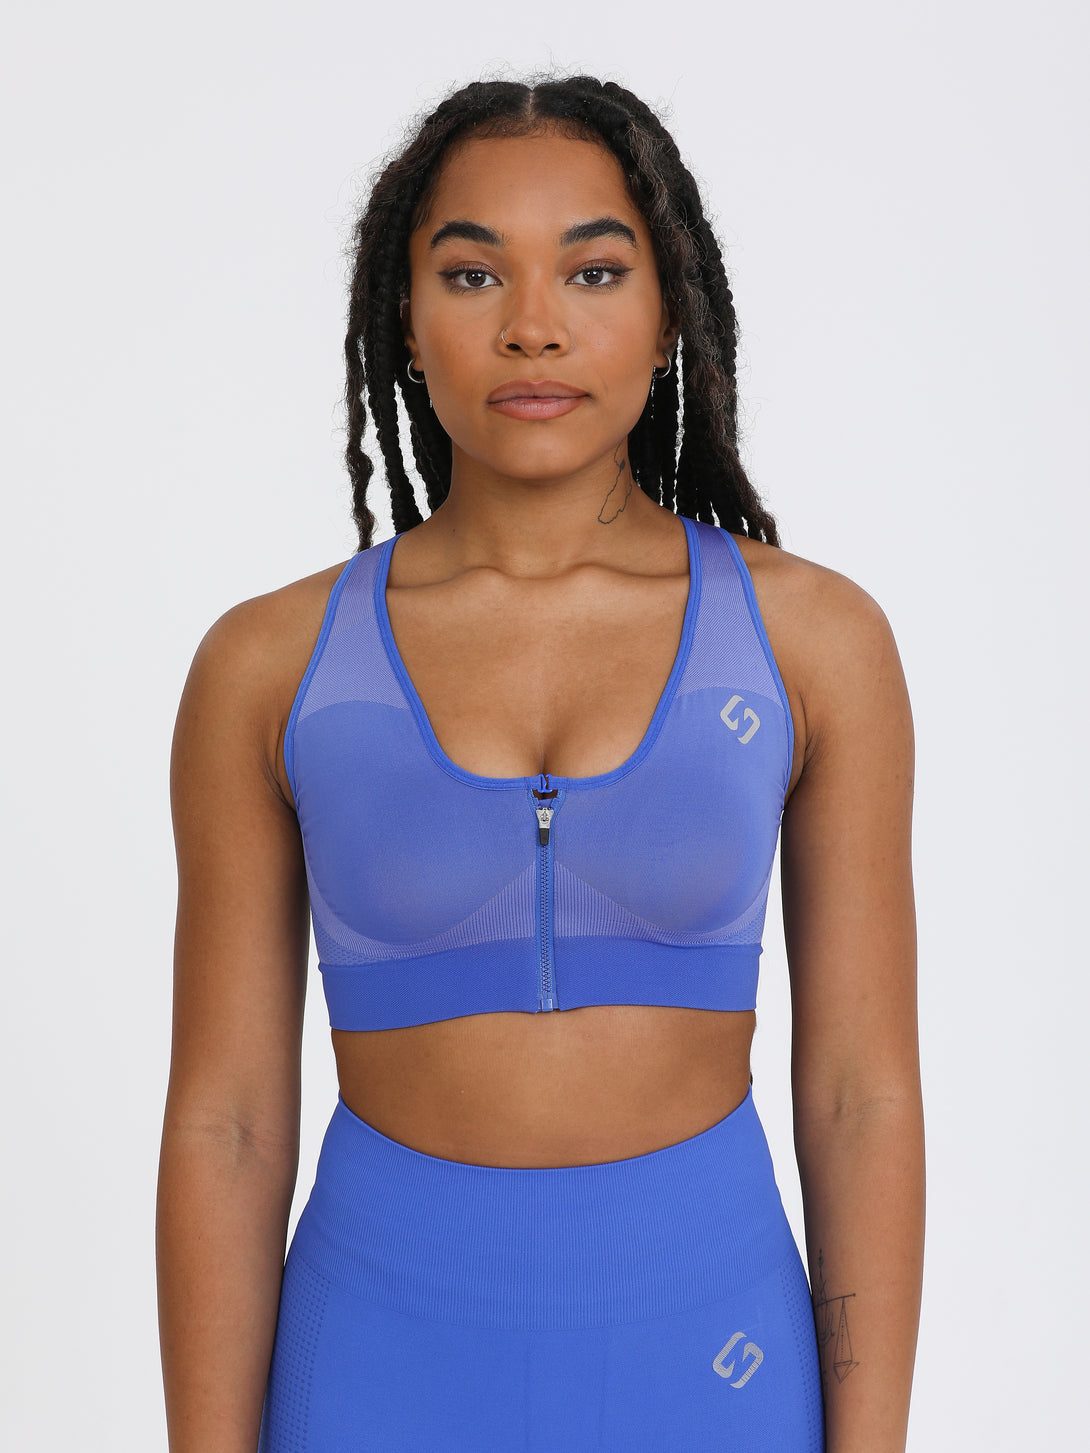 A Woman Wearing Amparo Blue Color High Impact Sports Bra